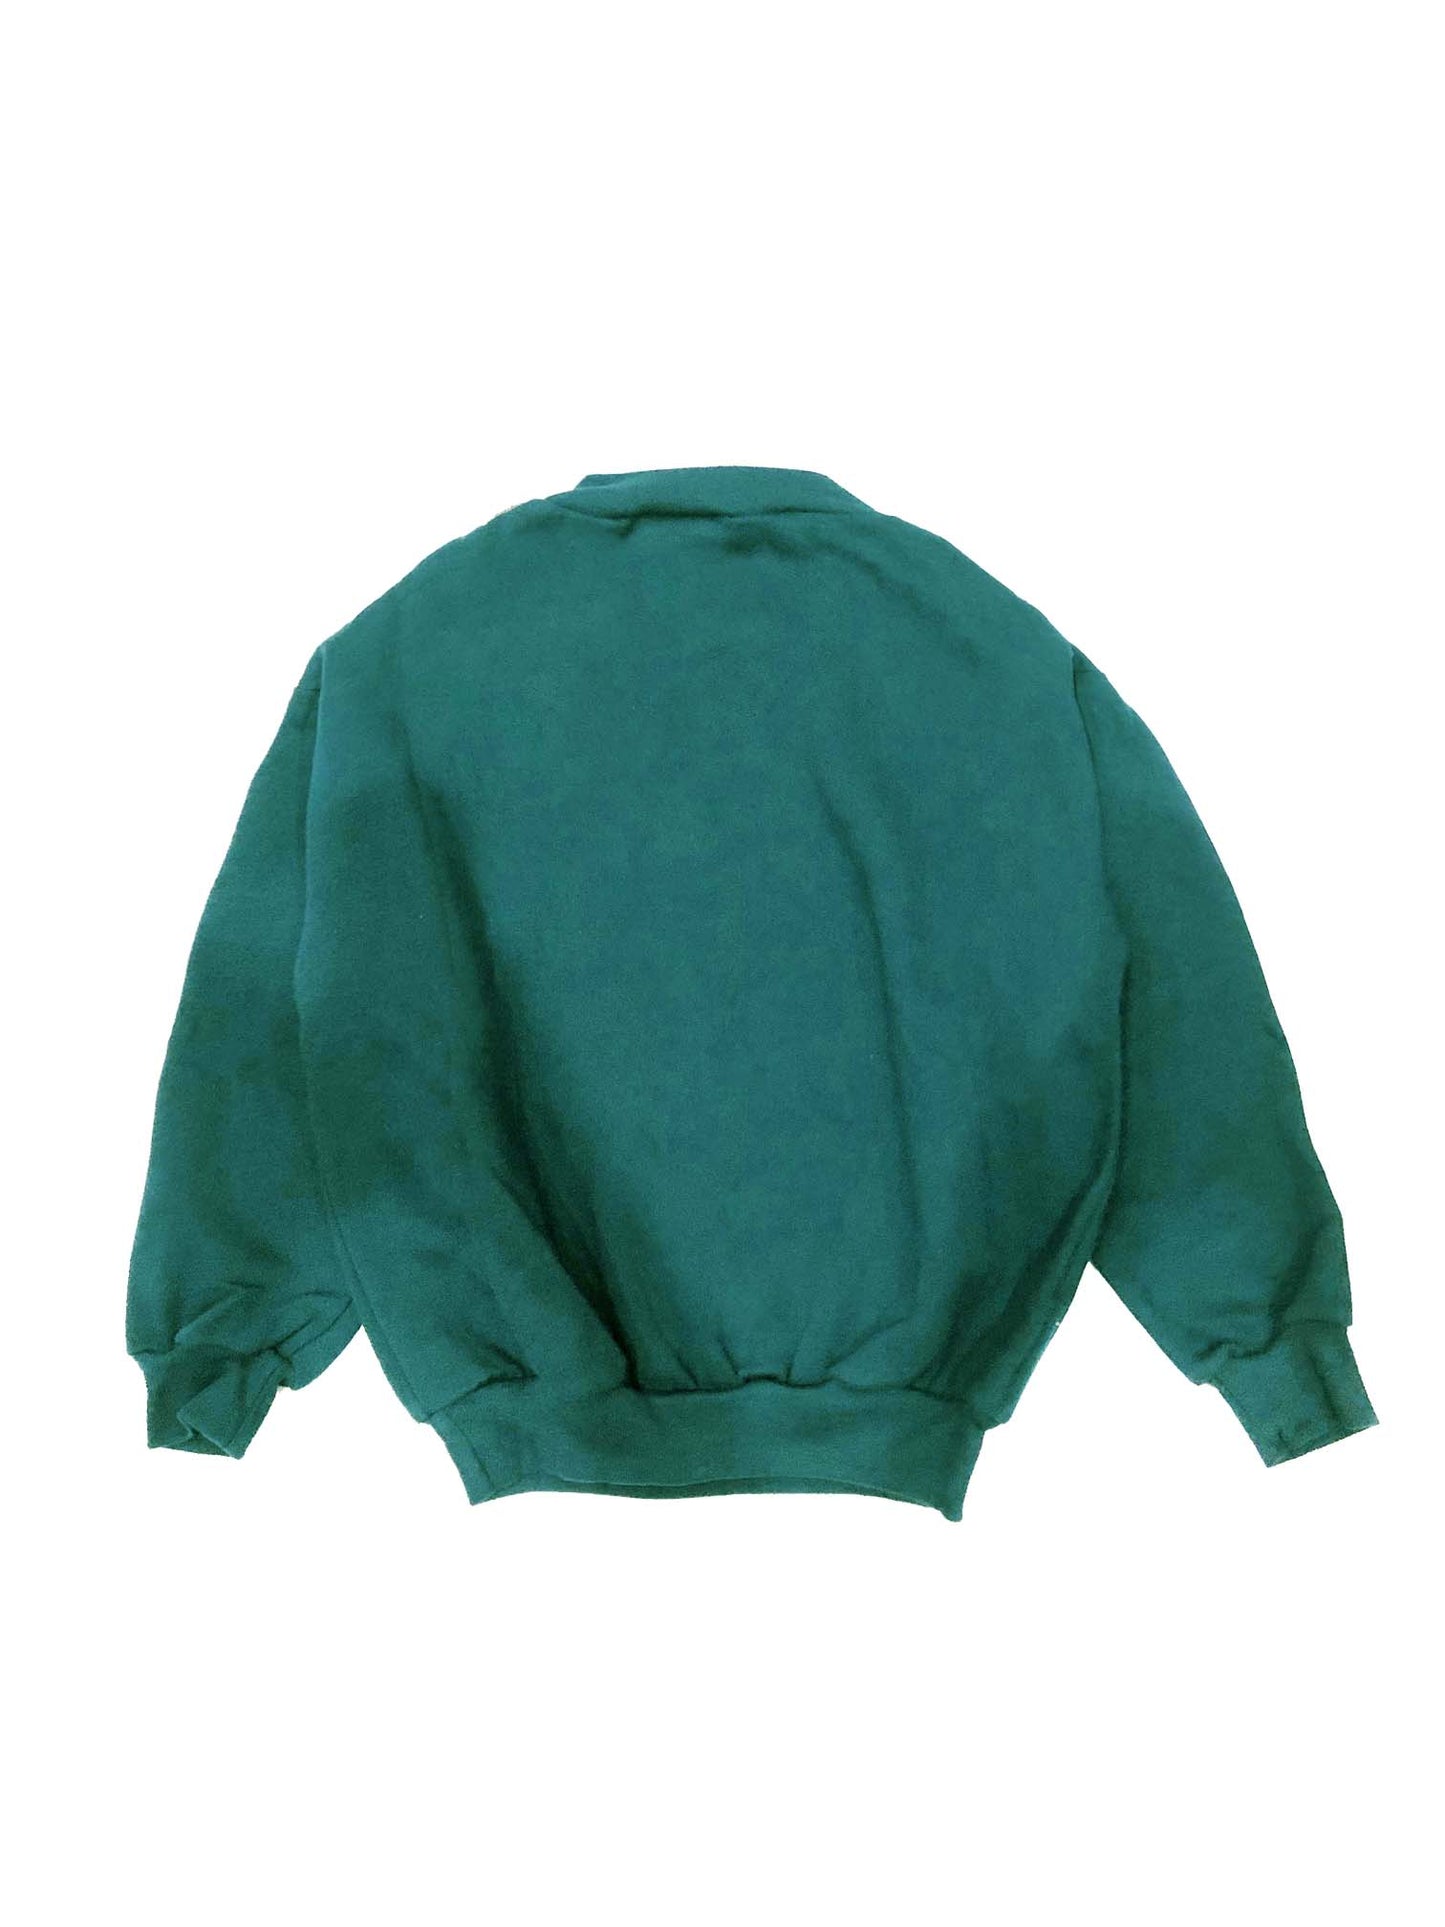 Unisex Kids Green Sweatshirt - S-XL